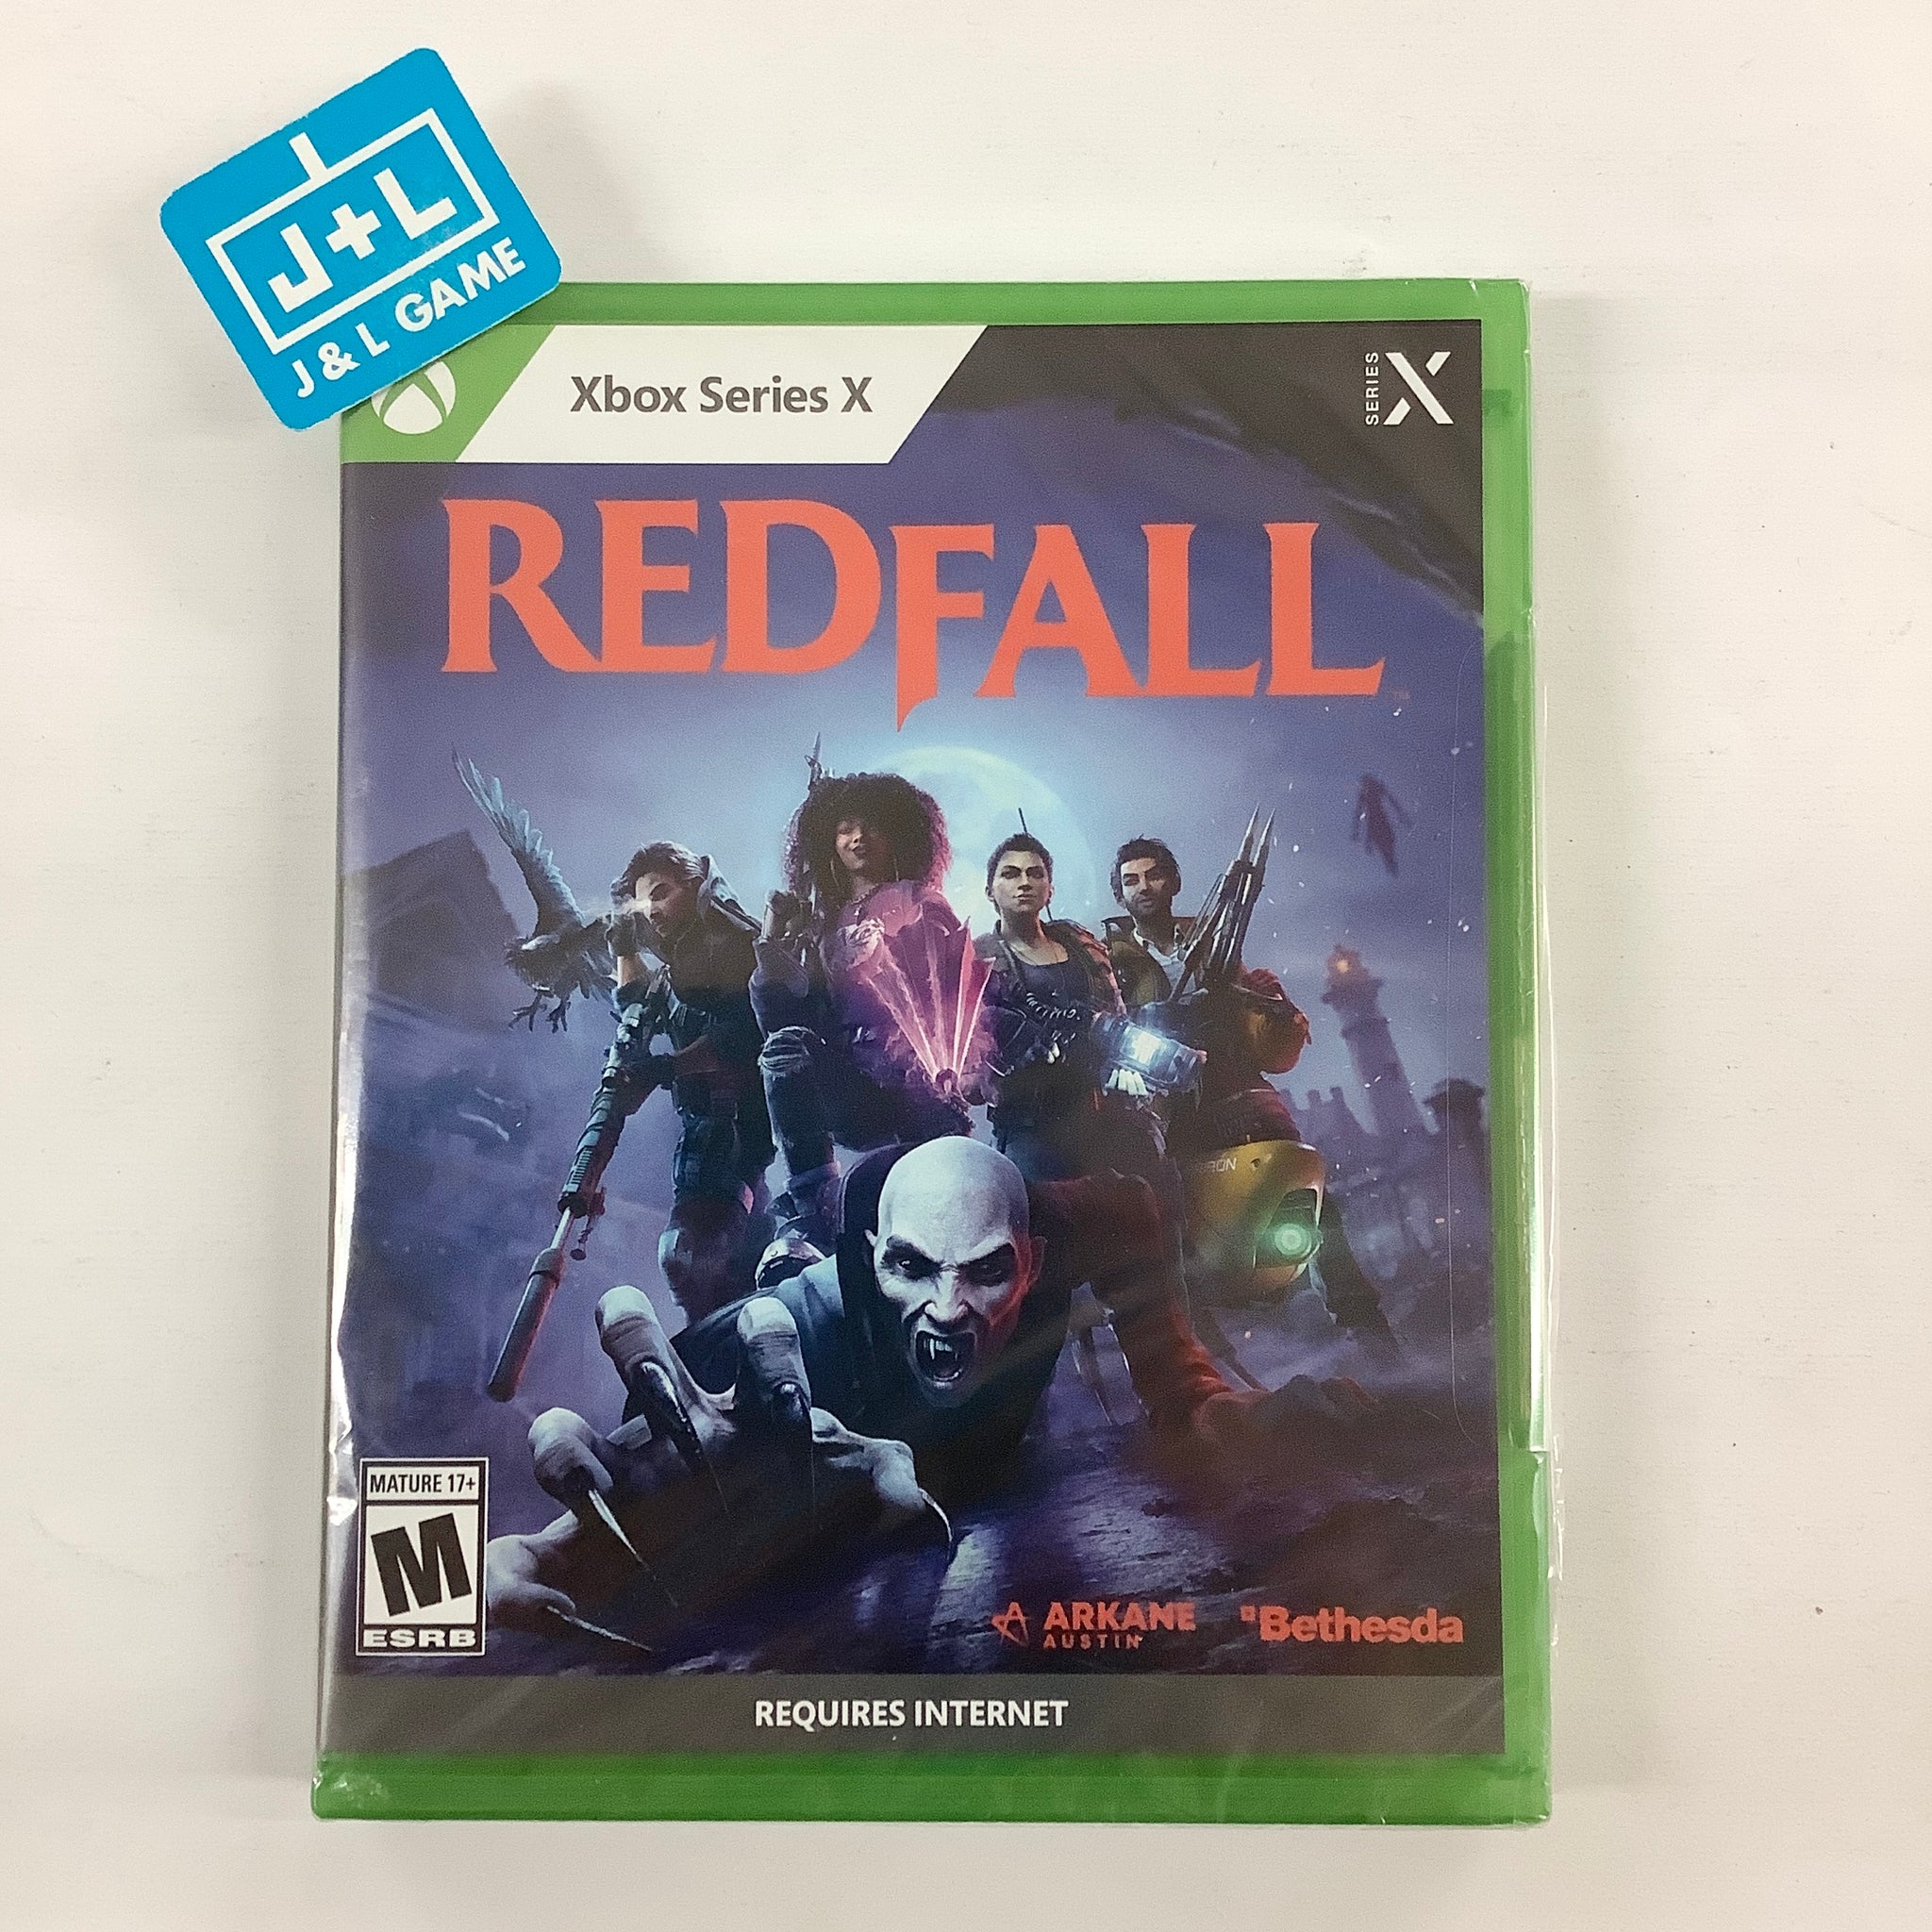 Redfall - (XSX) Xbox Series X – J&L Video Games New York City